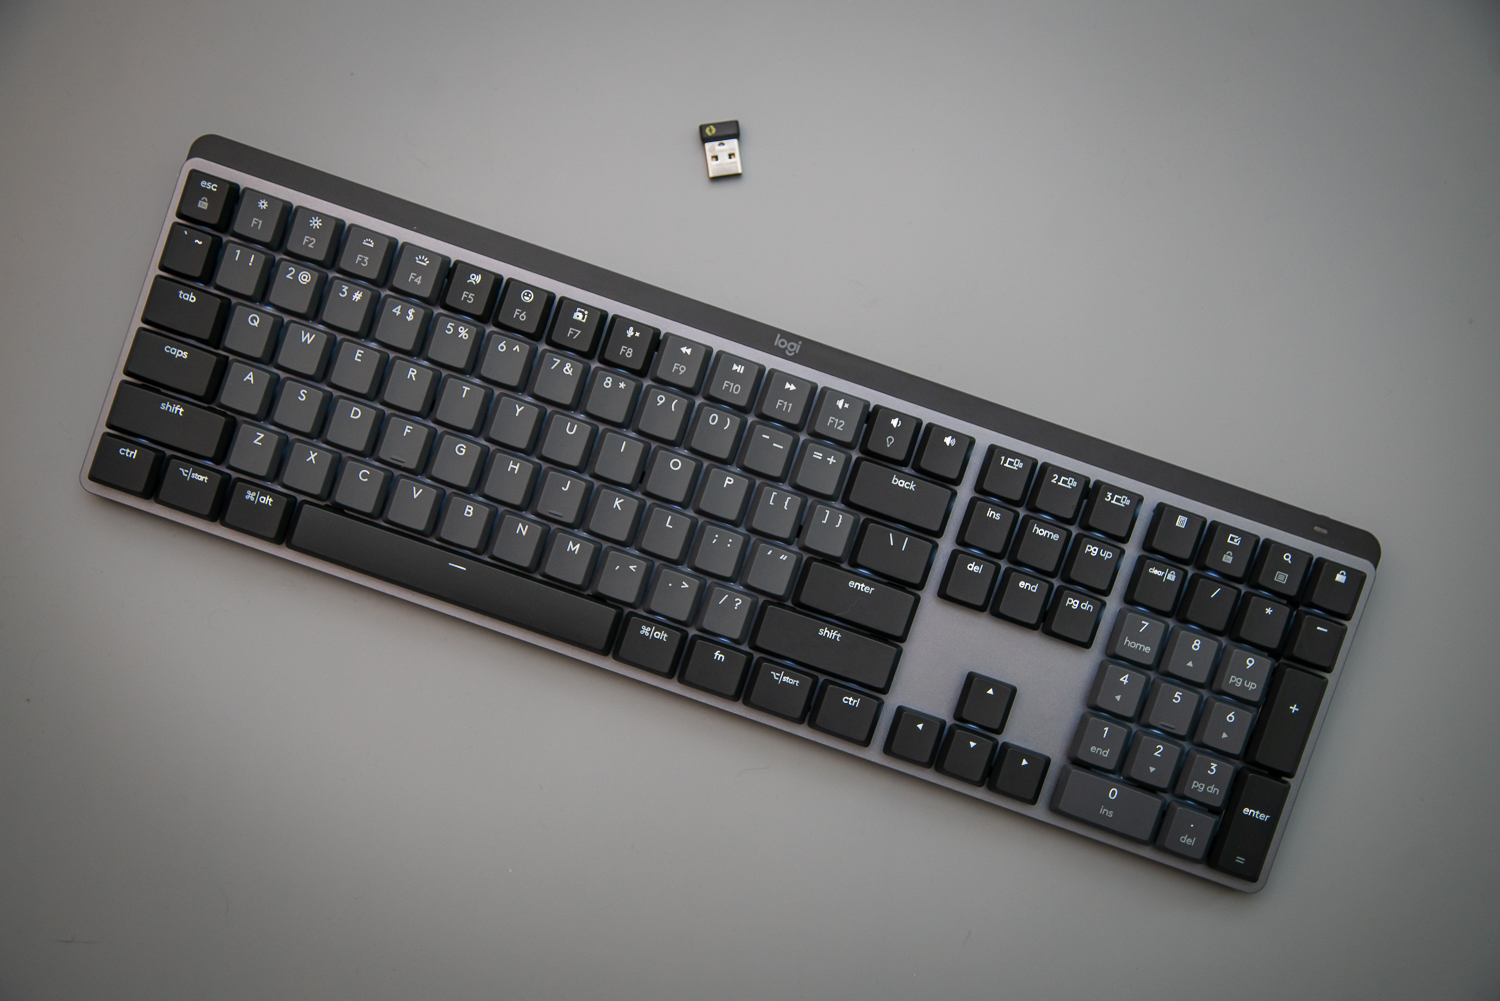 Logitech MX Mechanical keyboard on a gray background.